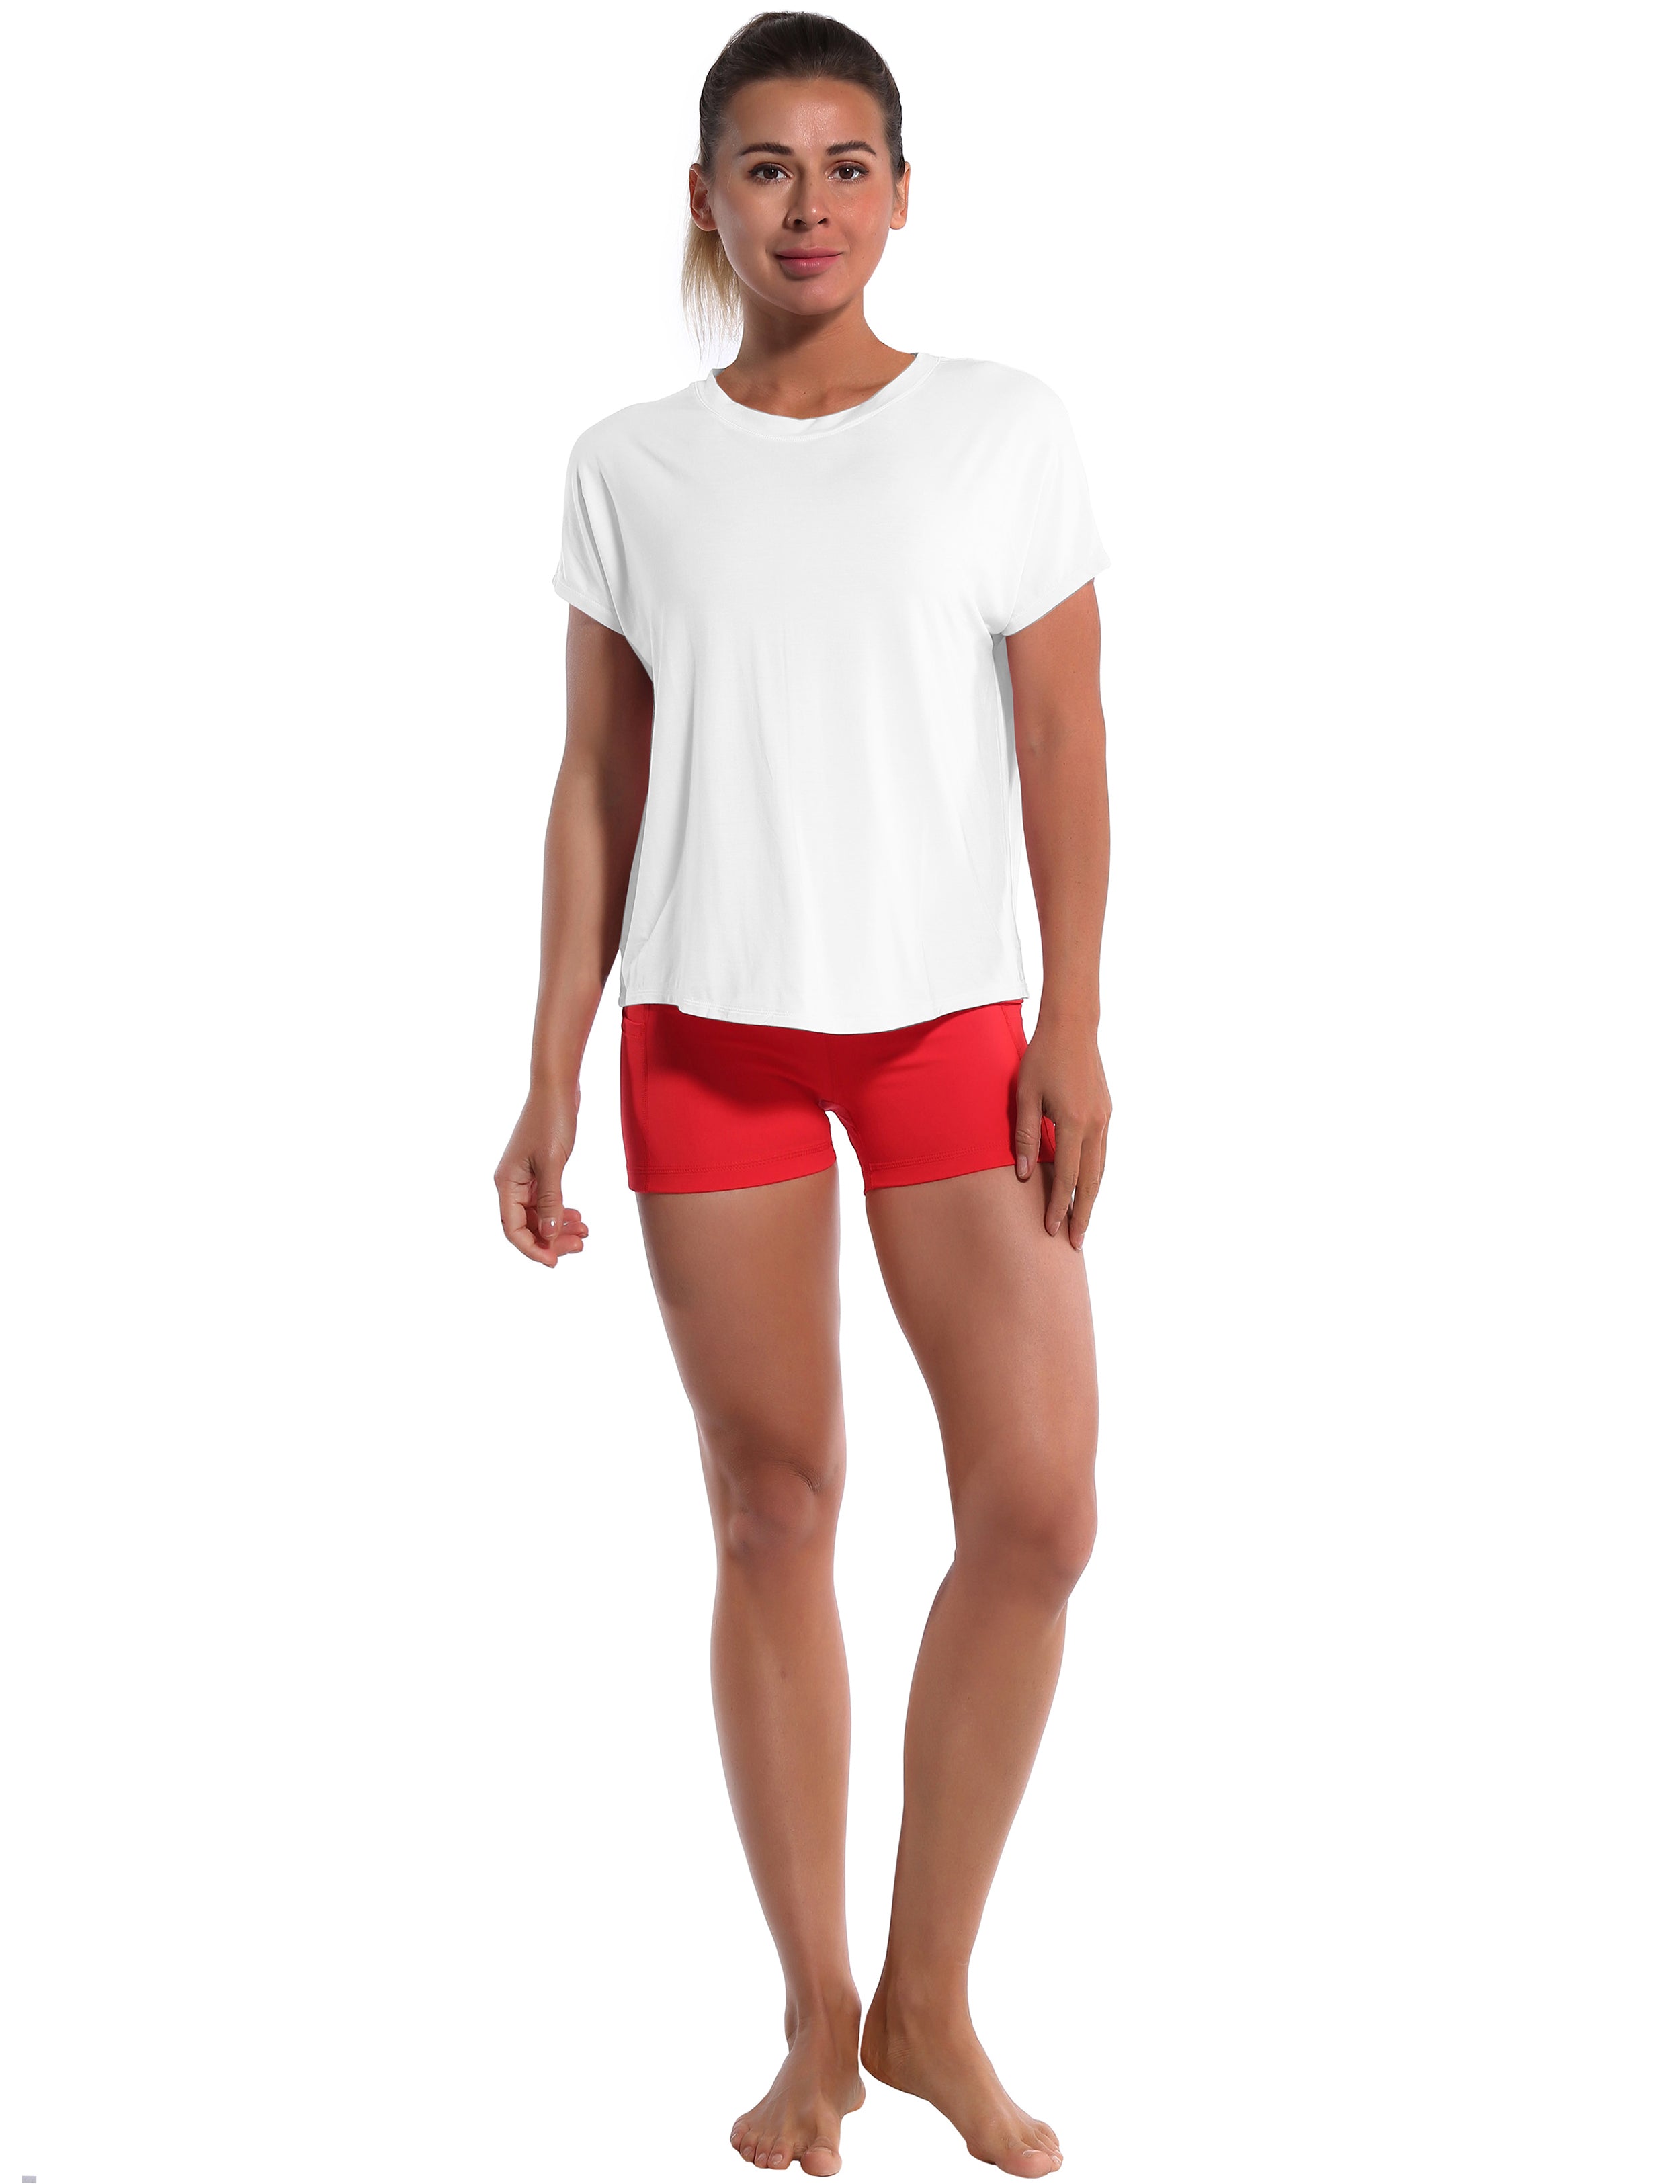 Hip Length Short Sleeve Shirt white_Plus Size